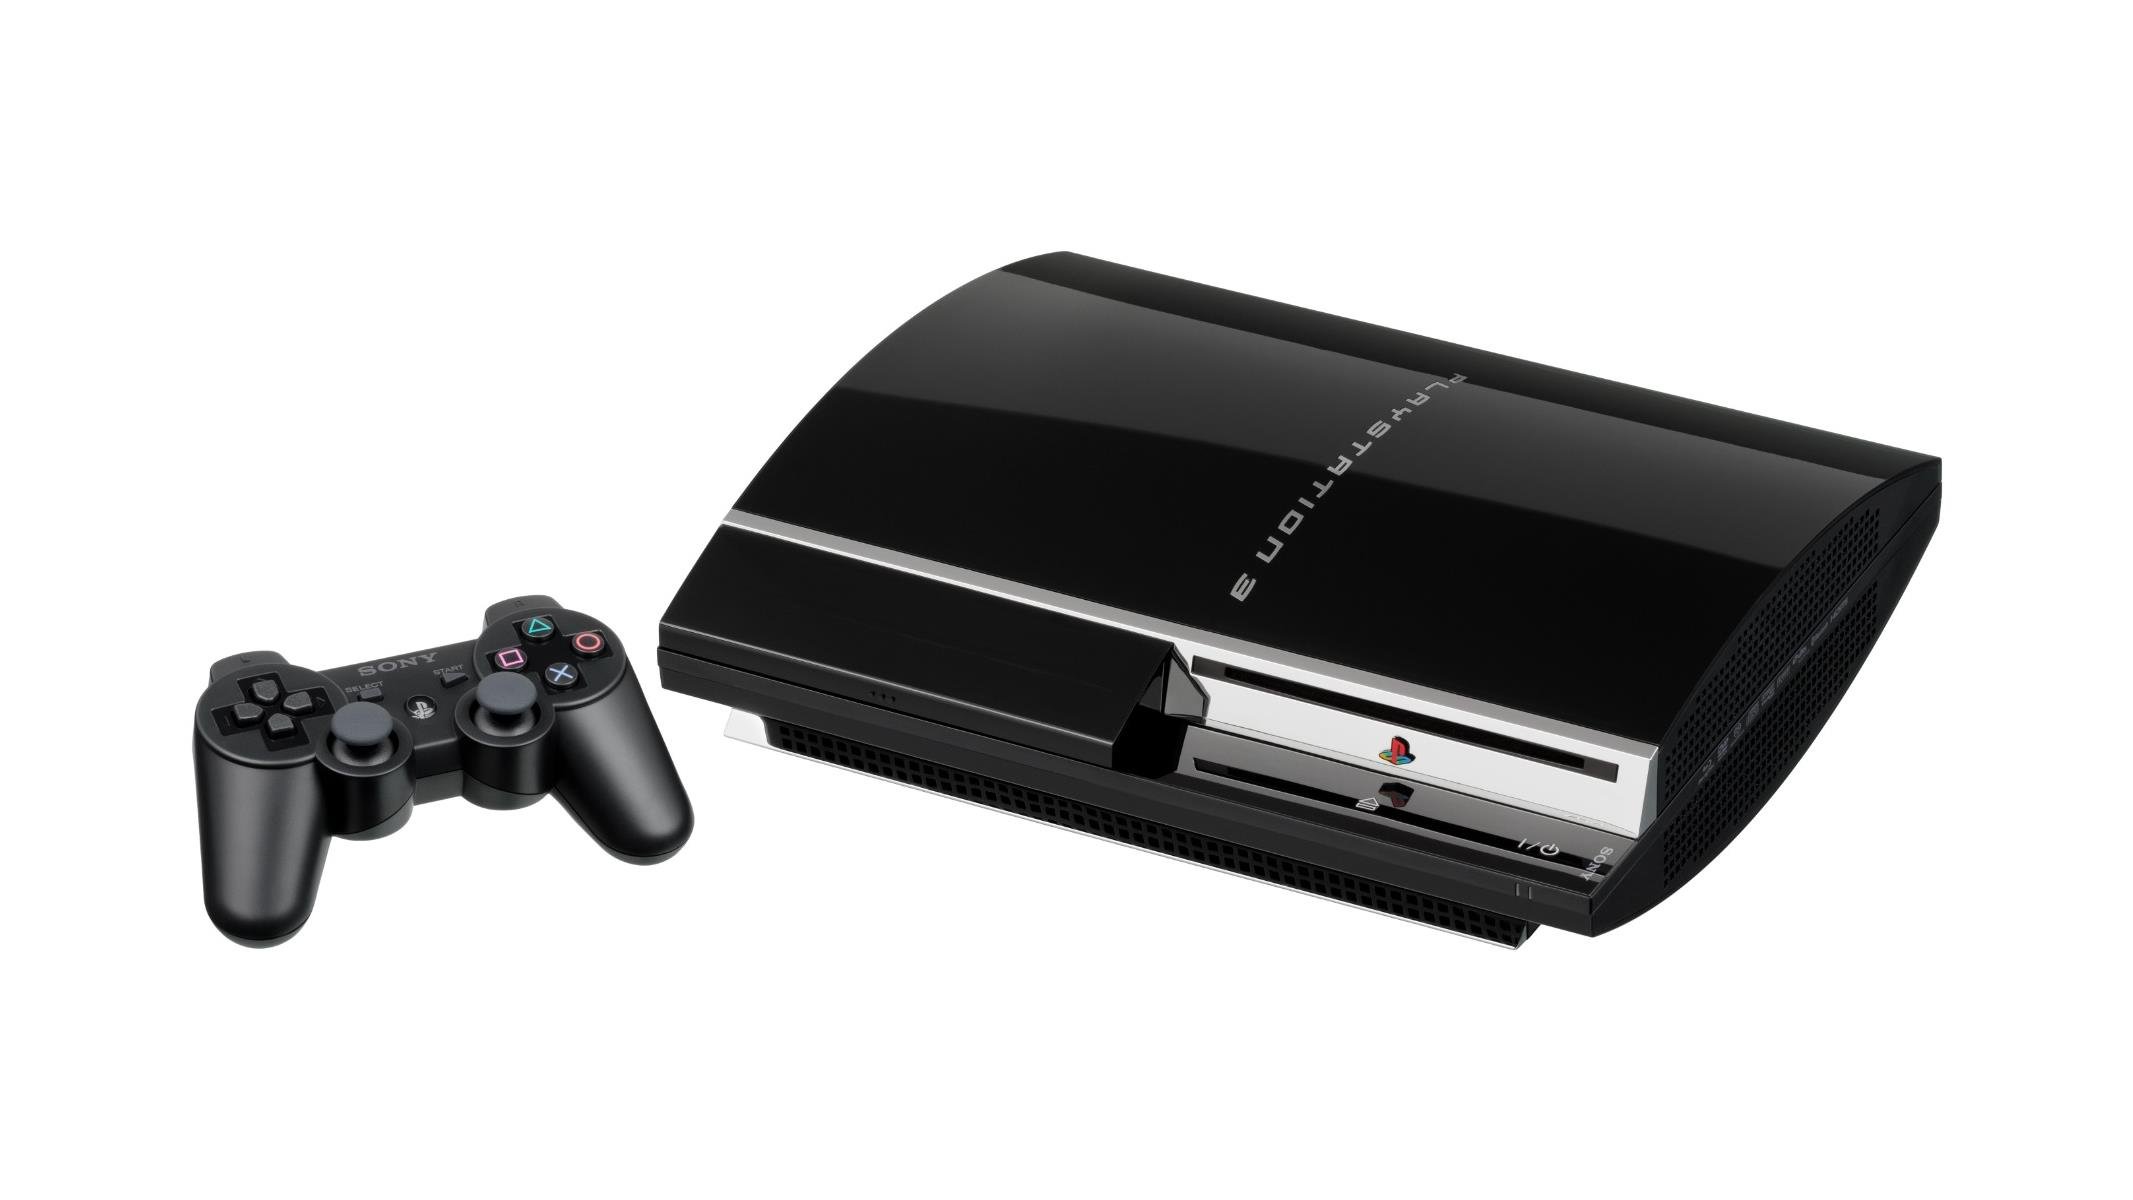 RPCS3 PlayStation 3 Emulator Version 0.0.28 Brings Considerable